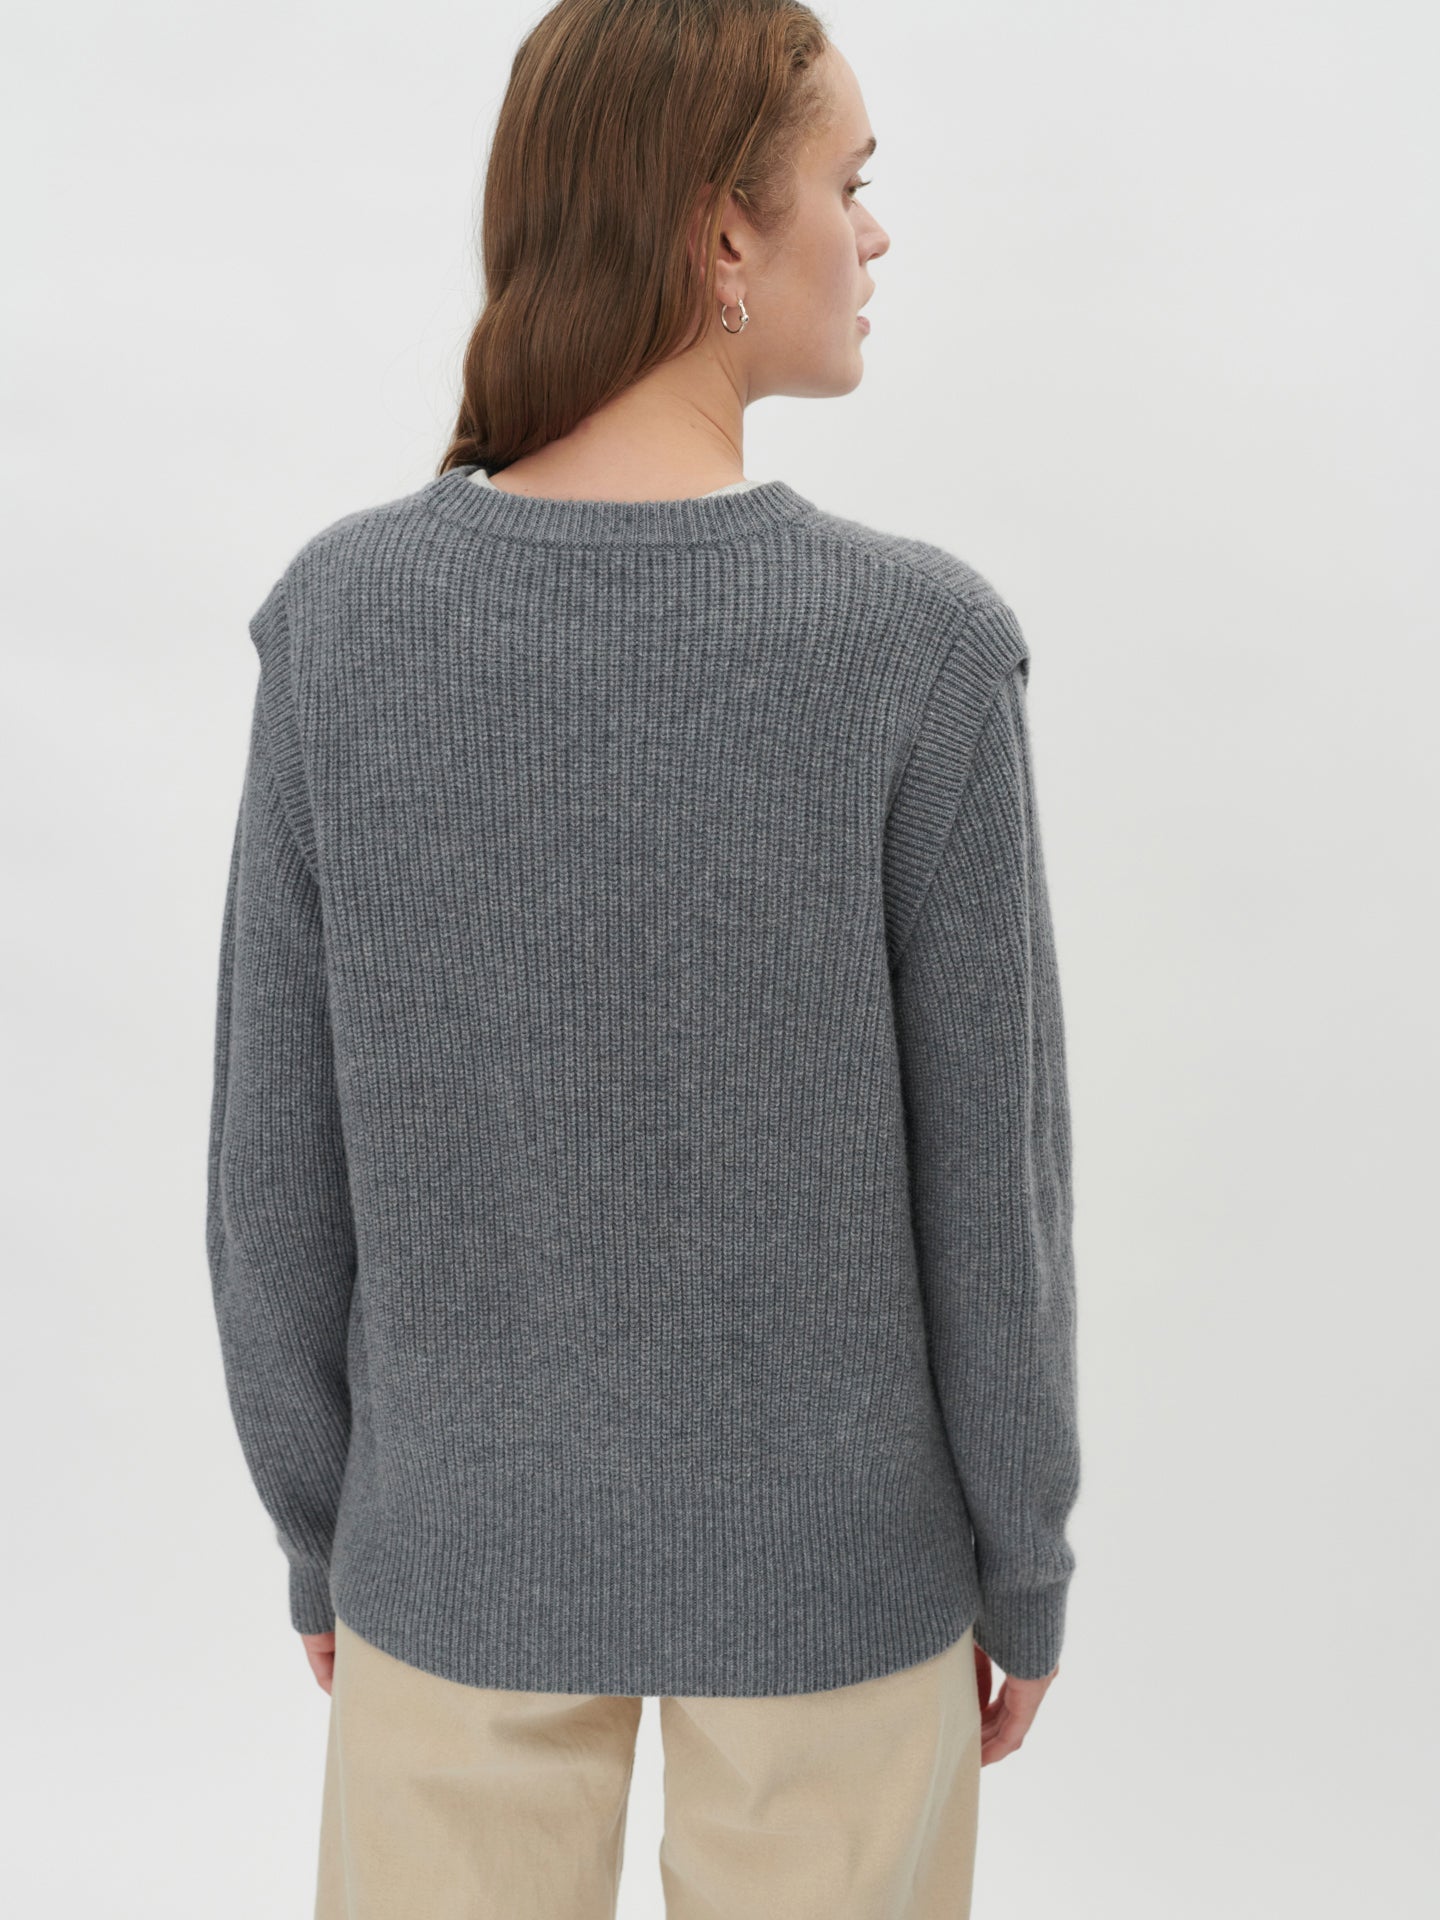 Women's Cashmere Layered Effect Sweater Dim Gray - Gobi Cashmere